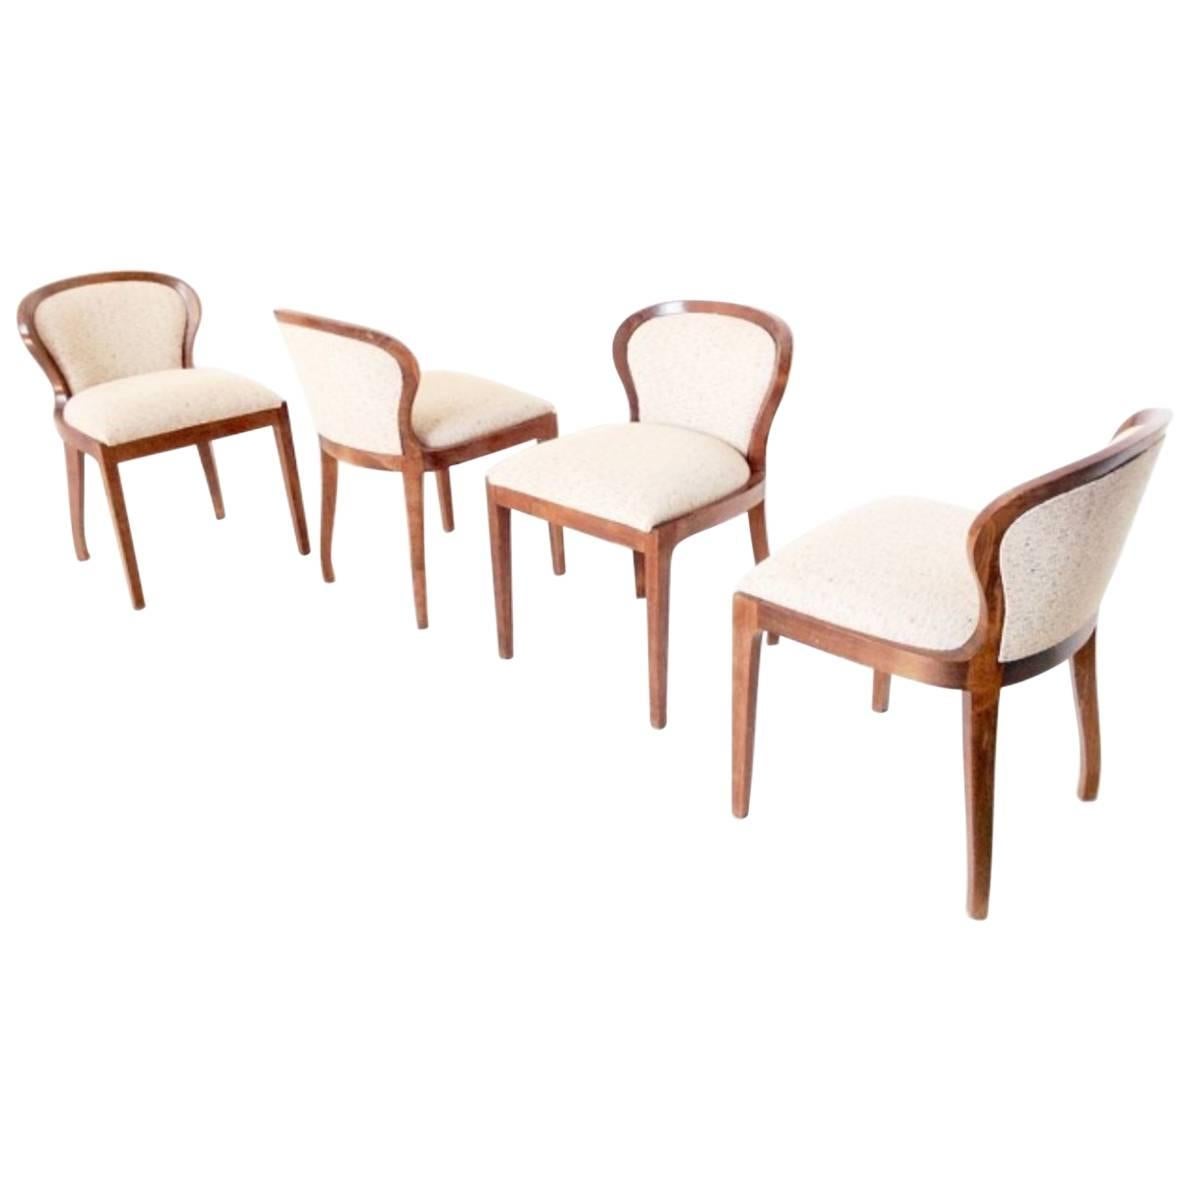 Set of Four Chairs Mod "Stradivarius" by Lorenzo Forges Davanzati for Elam, 1961